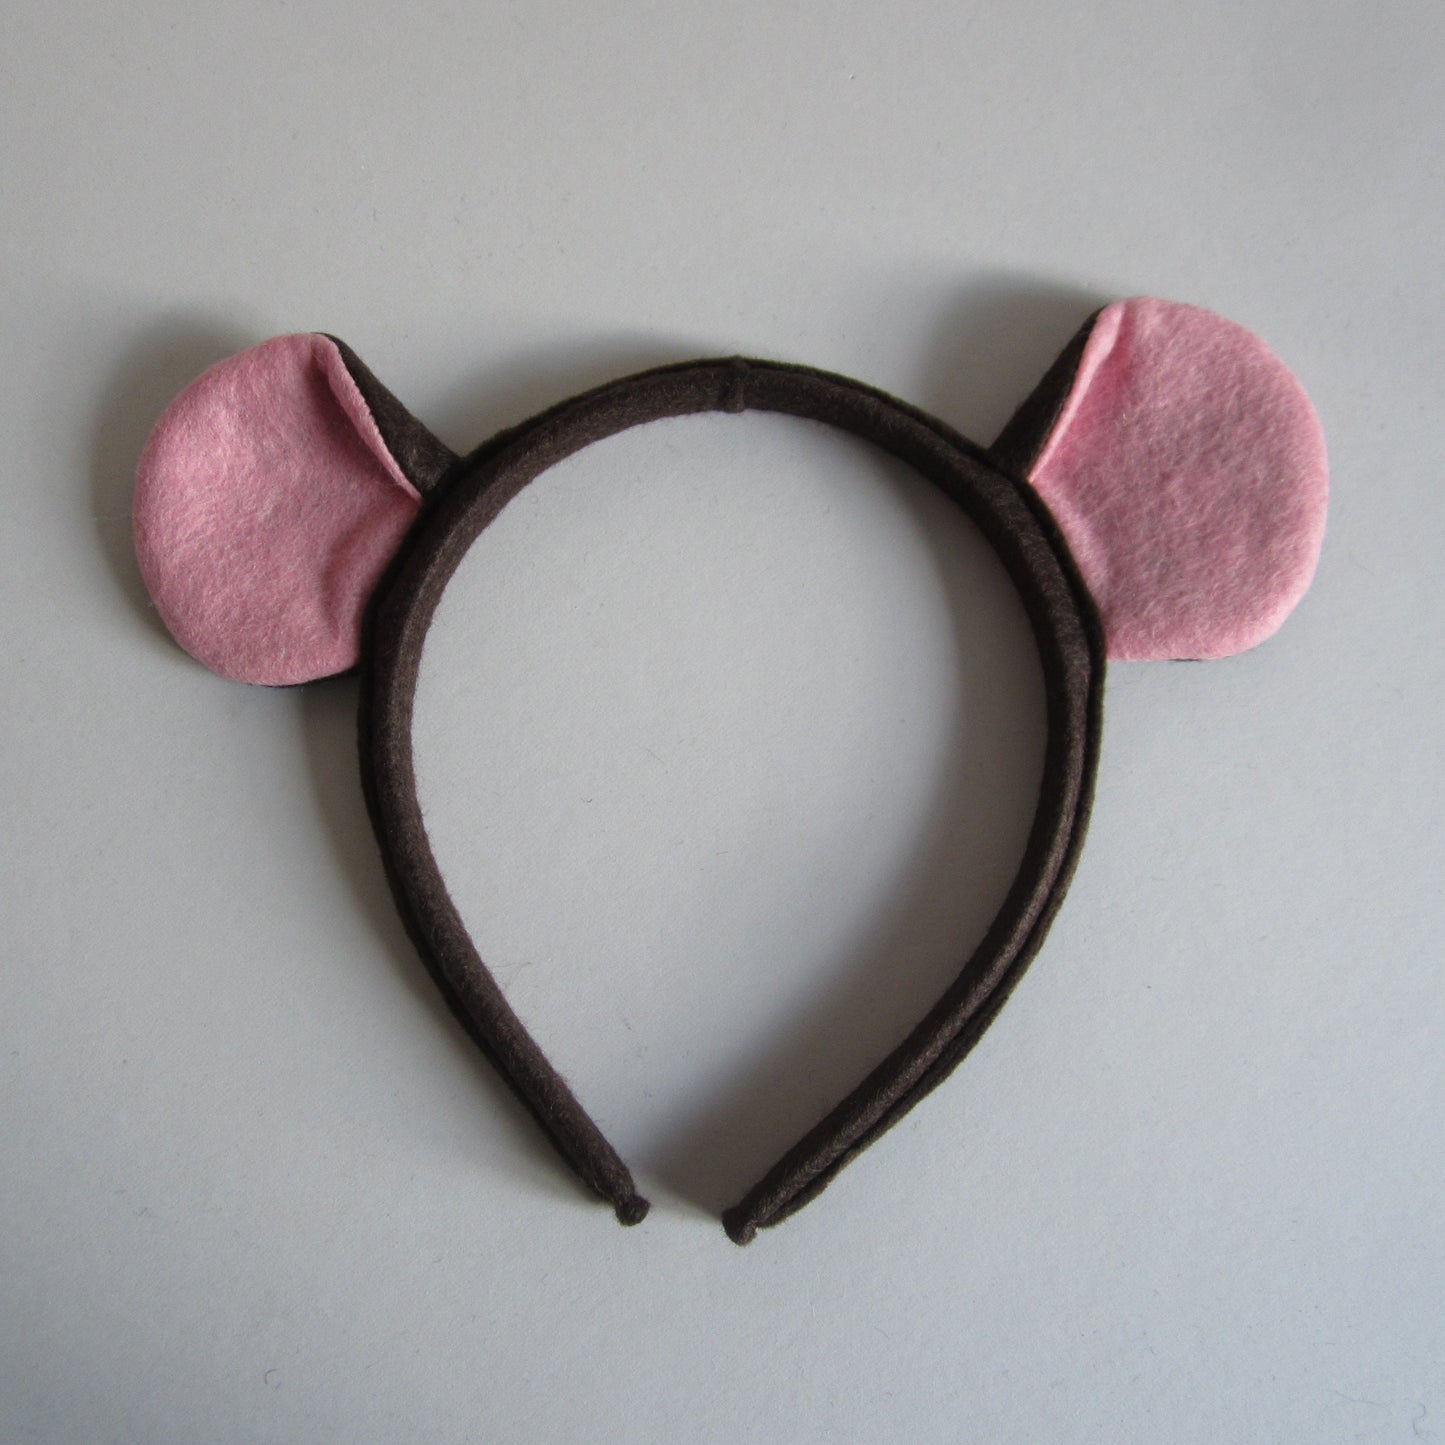 Mouse Ears Hairband Made of Dark Brown Felt